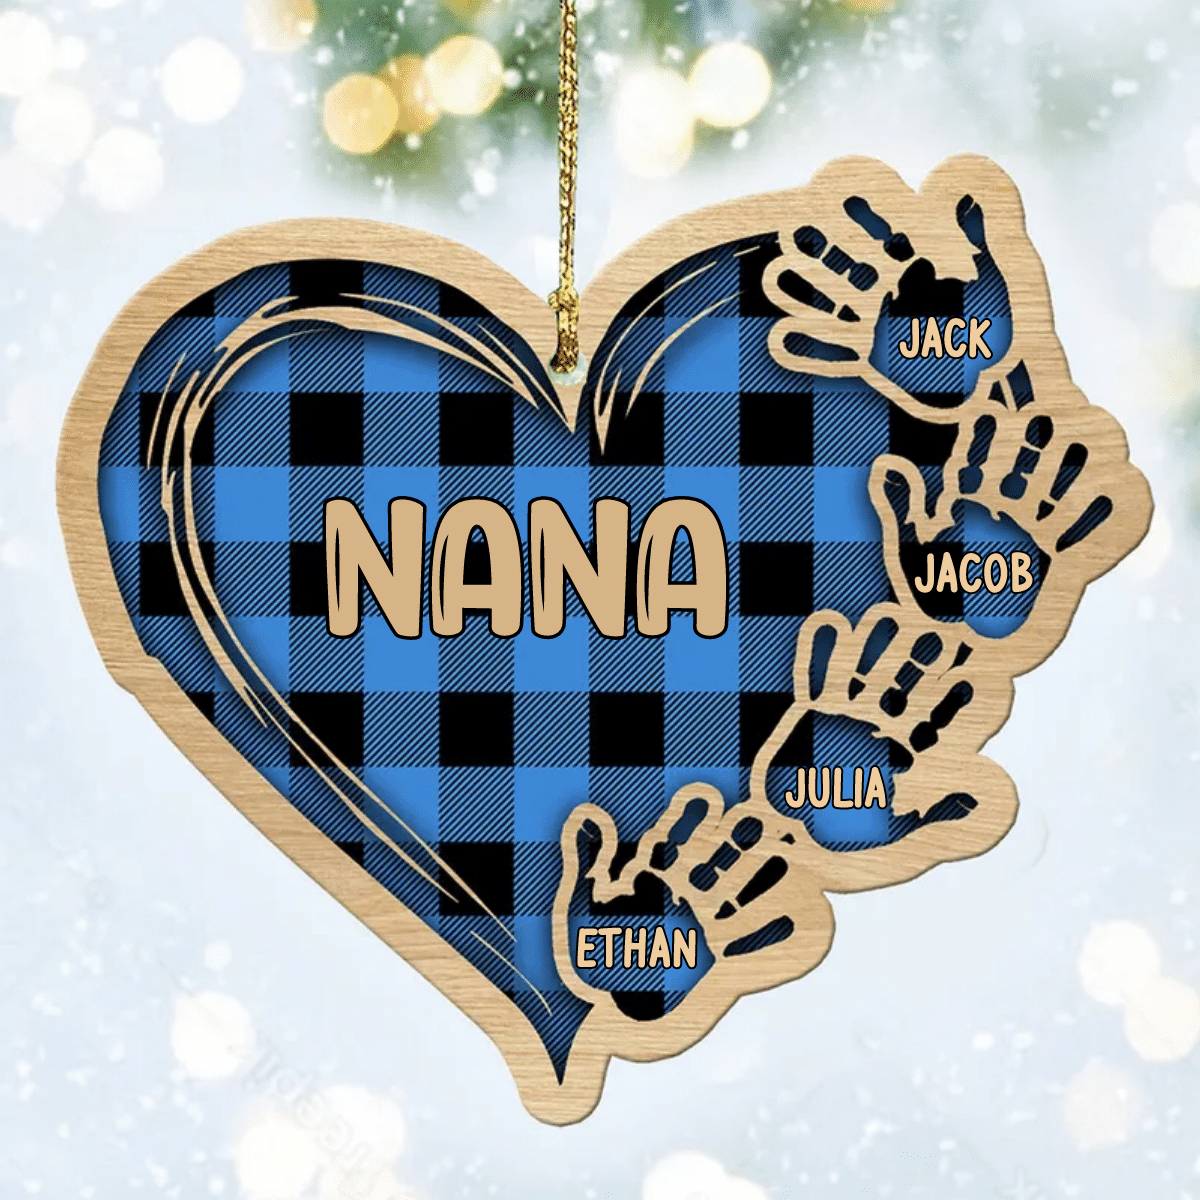 Grandma Mom Heart Hand Print With Kids/ Grandkids Personalized Wood Ornament for Tree Decor